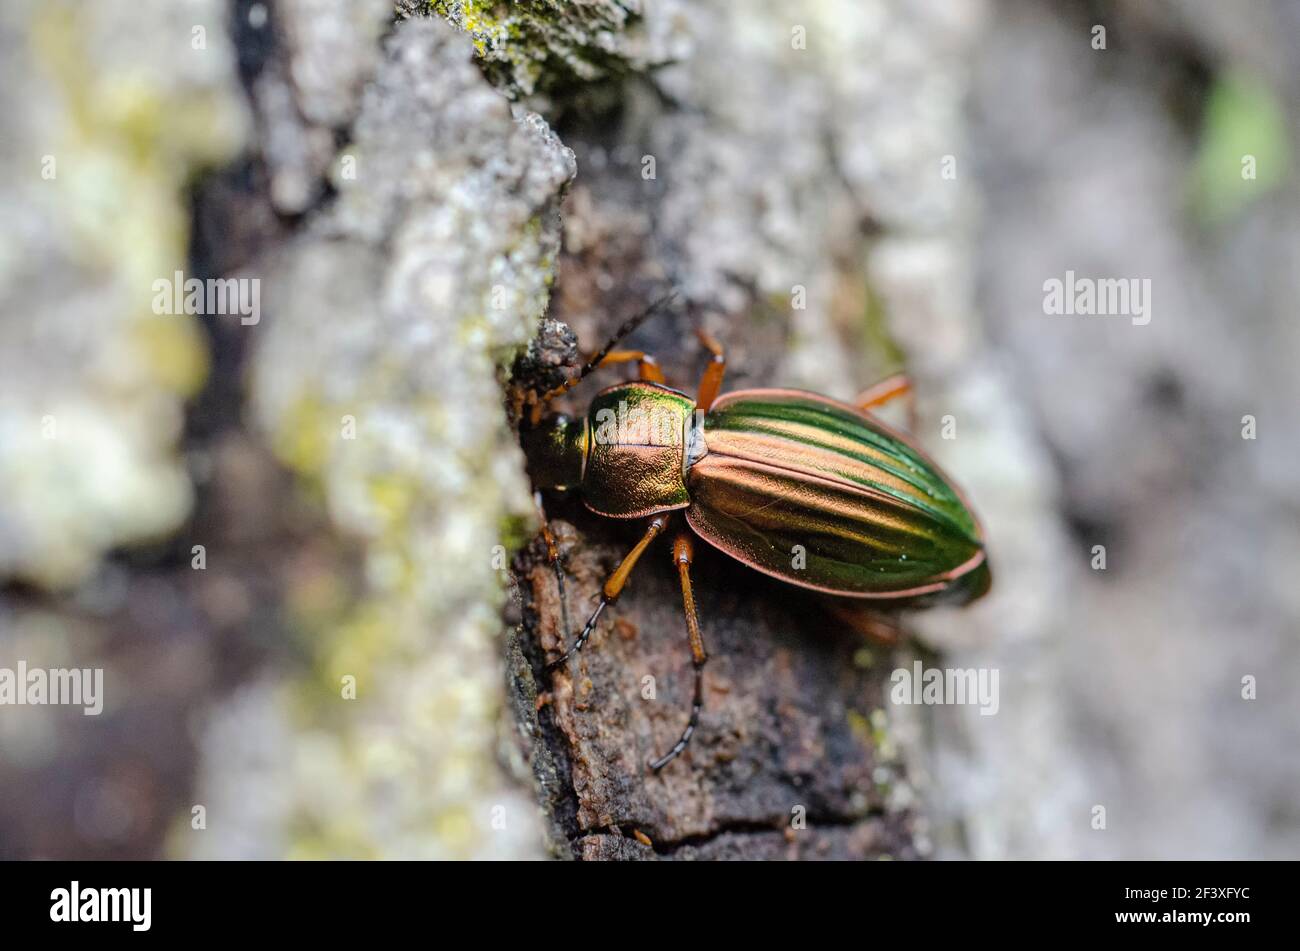 Ground beetle Carabus auratus feeding on sap Stock Photo